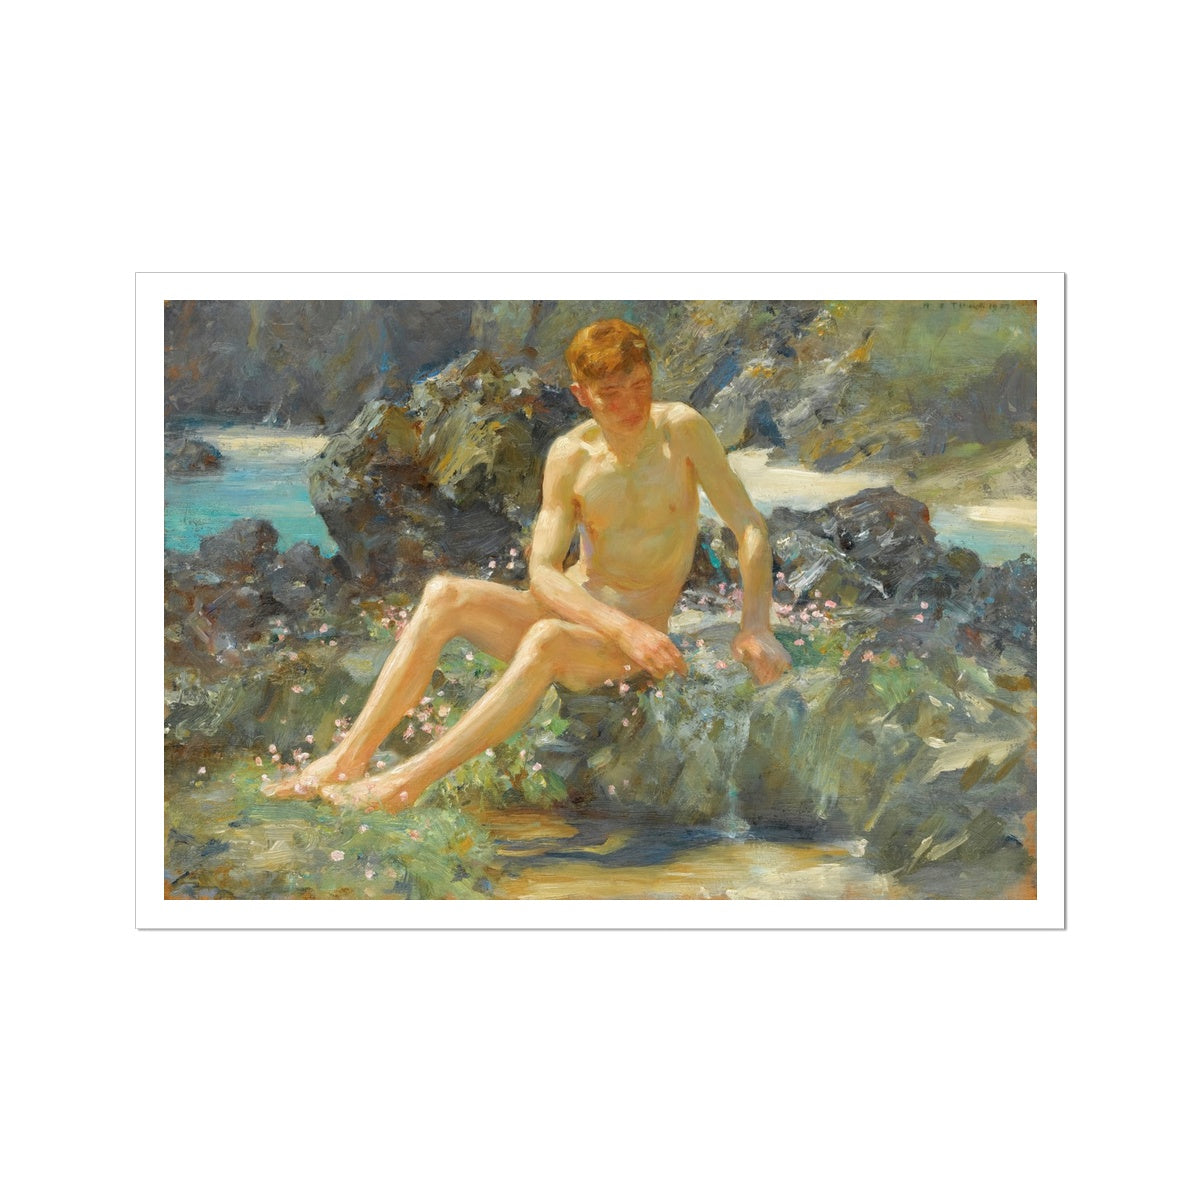 Henry Scott Tuke Open Edition Art Print. Nude on the Rocks. Art Gallery Historic Art